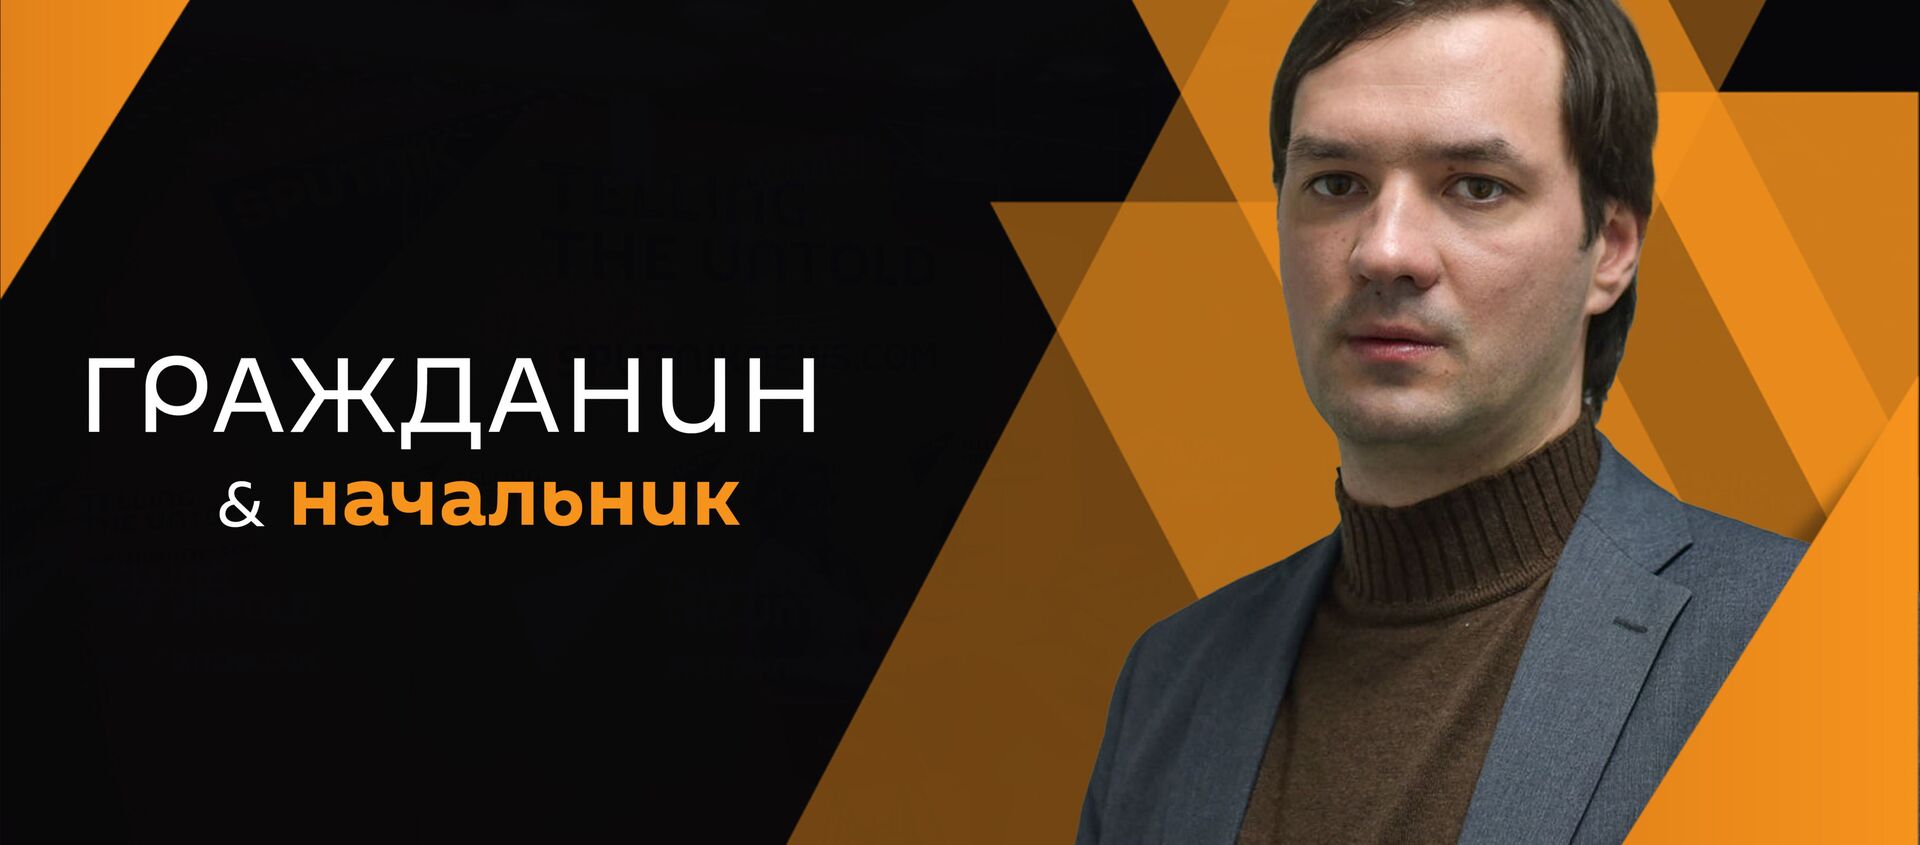 Дмитрий Маршания - Sputnik Абхазия, 1920, 31.03.2021